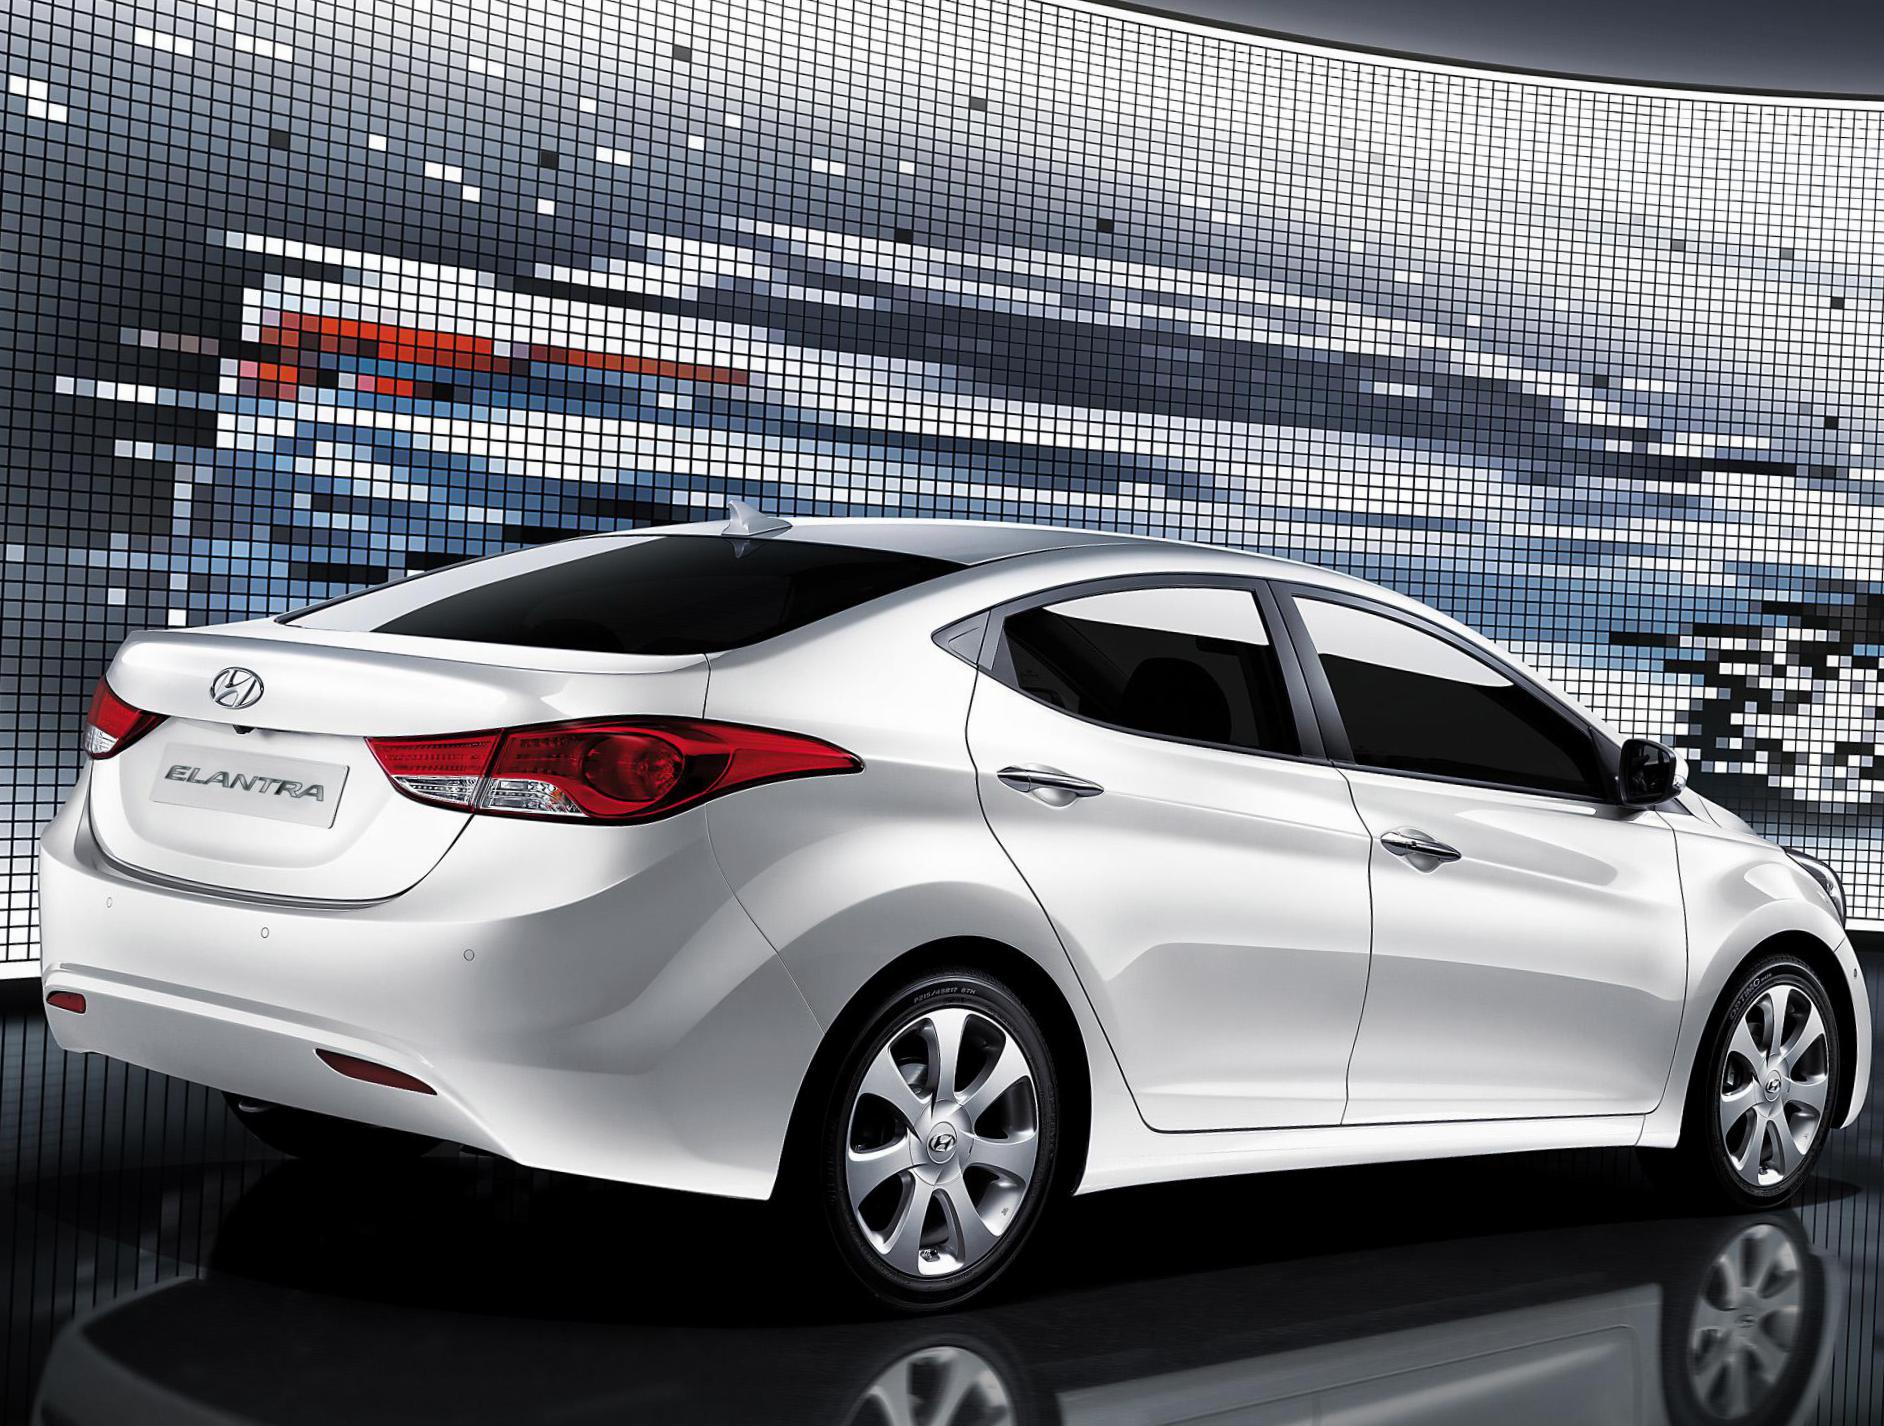 Hyundai Elantra MD price coupe